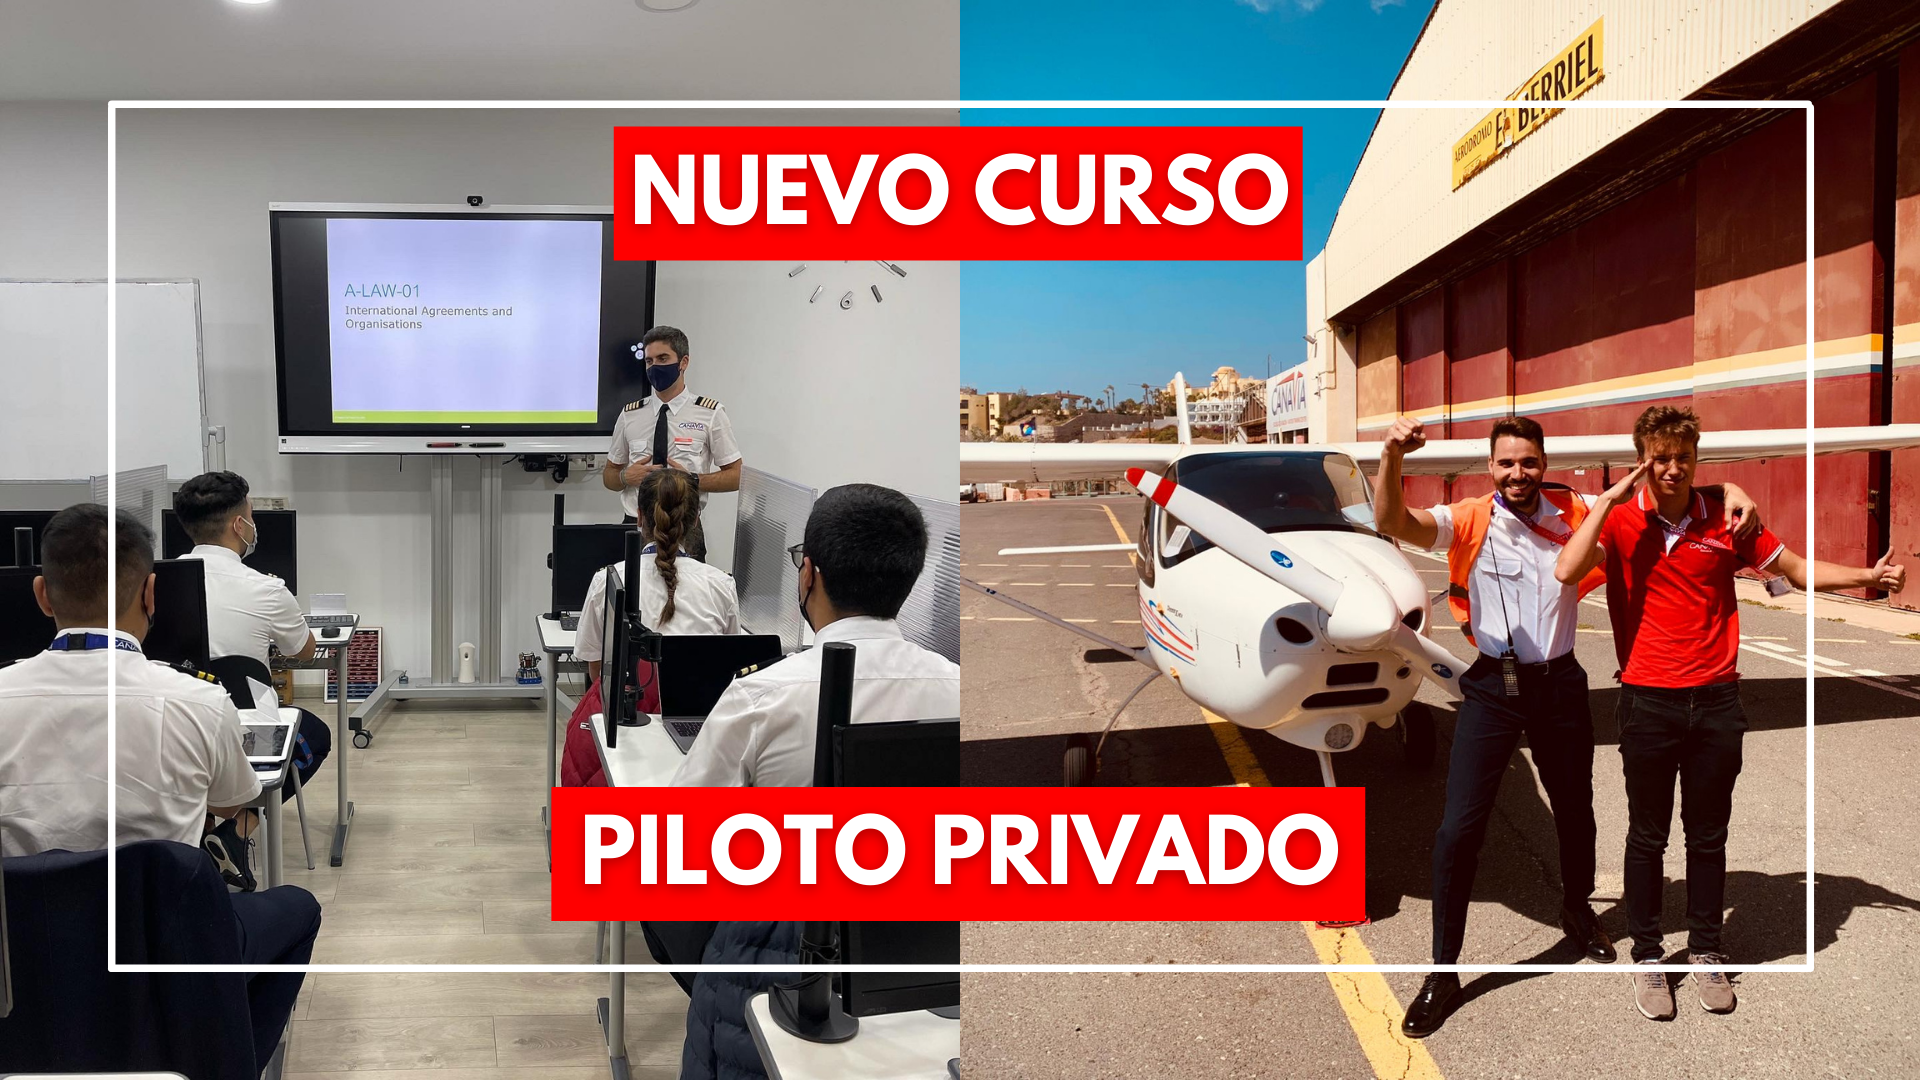 Nuevo curso PPL Piloto Privado 2022.